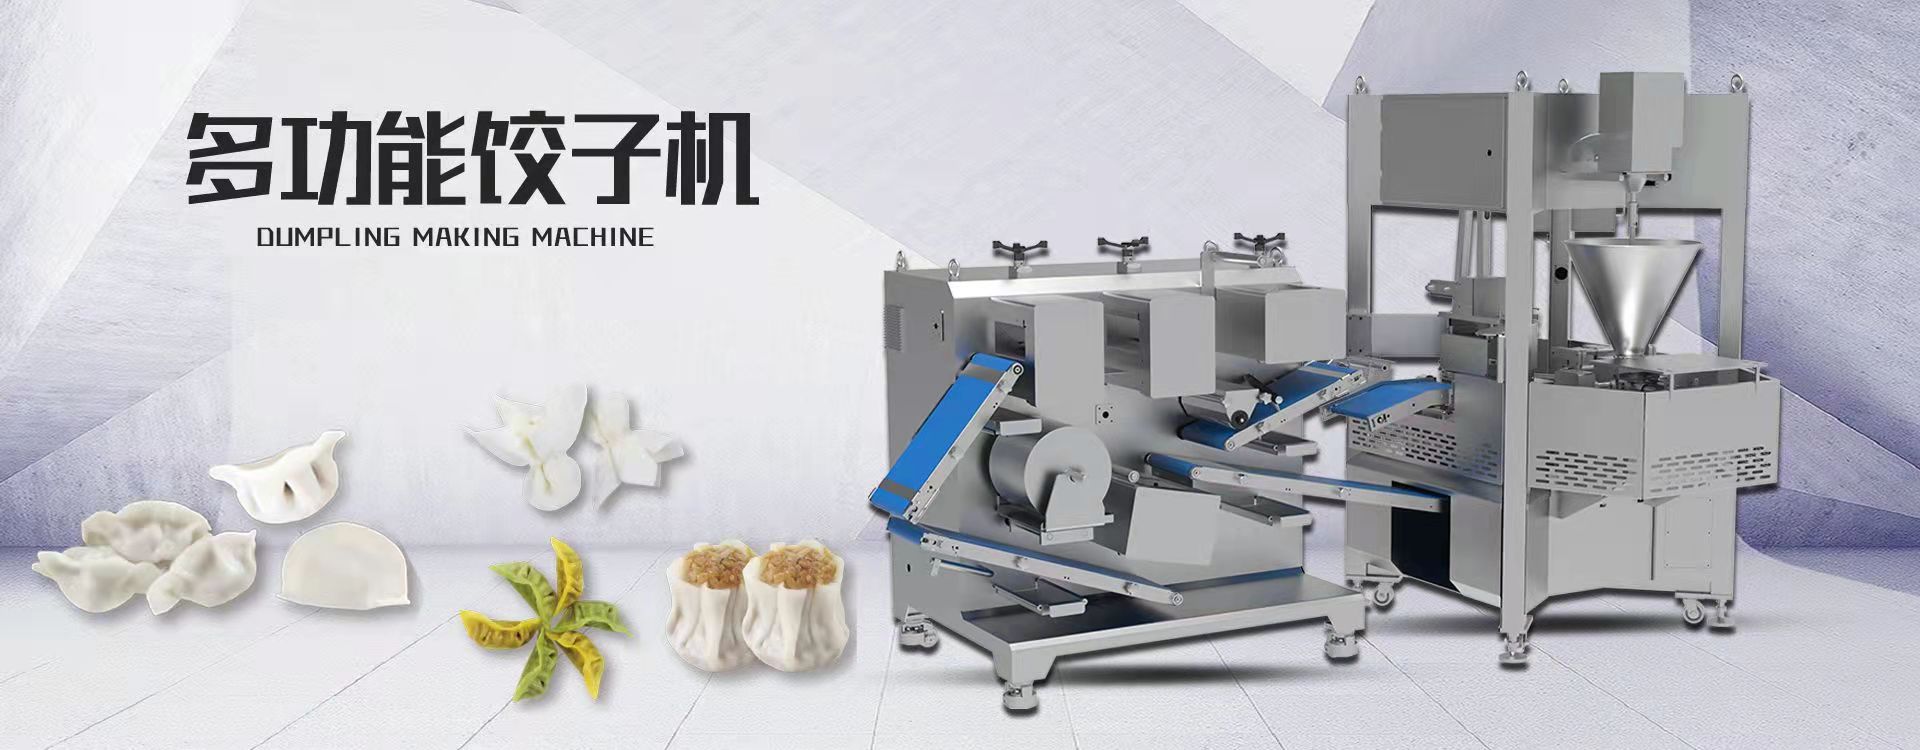 China Dumpling Machine Manufacturer